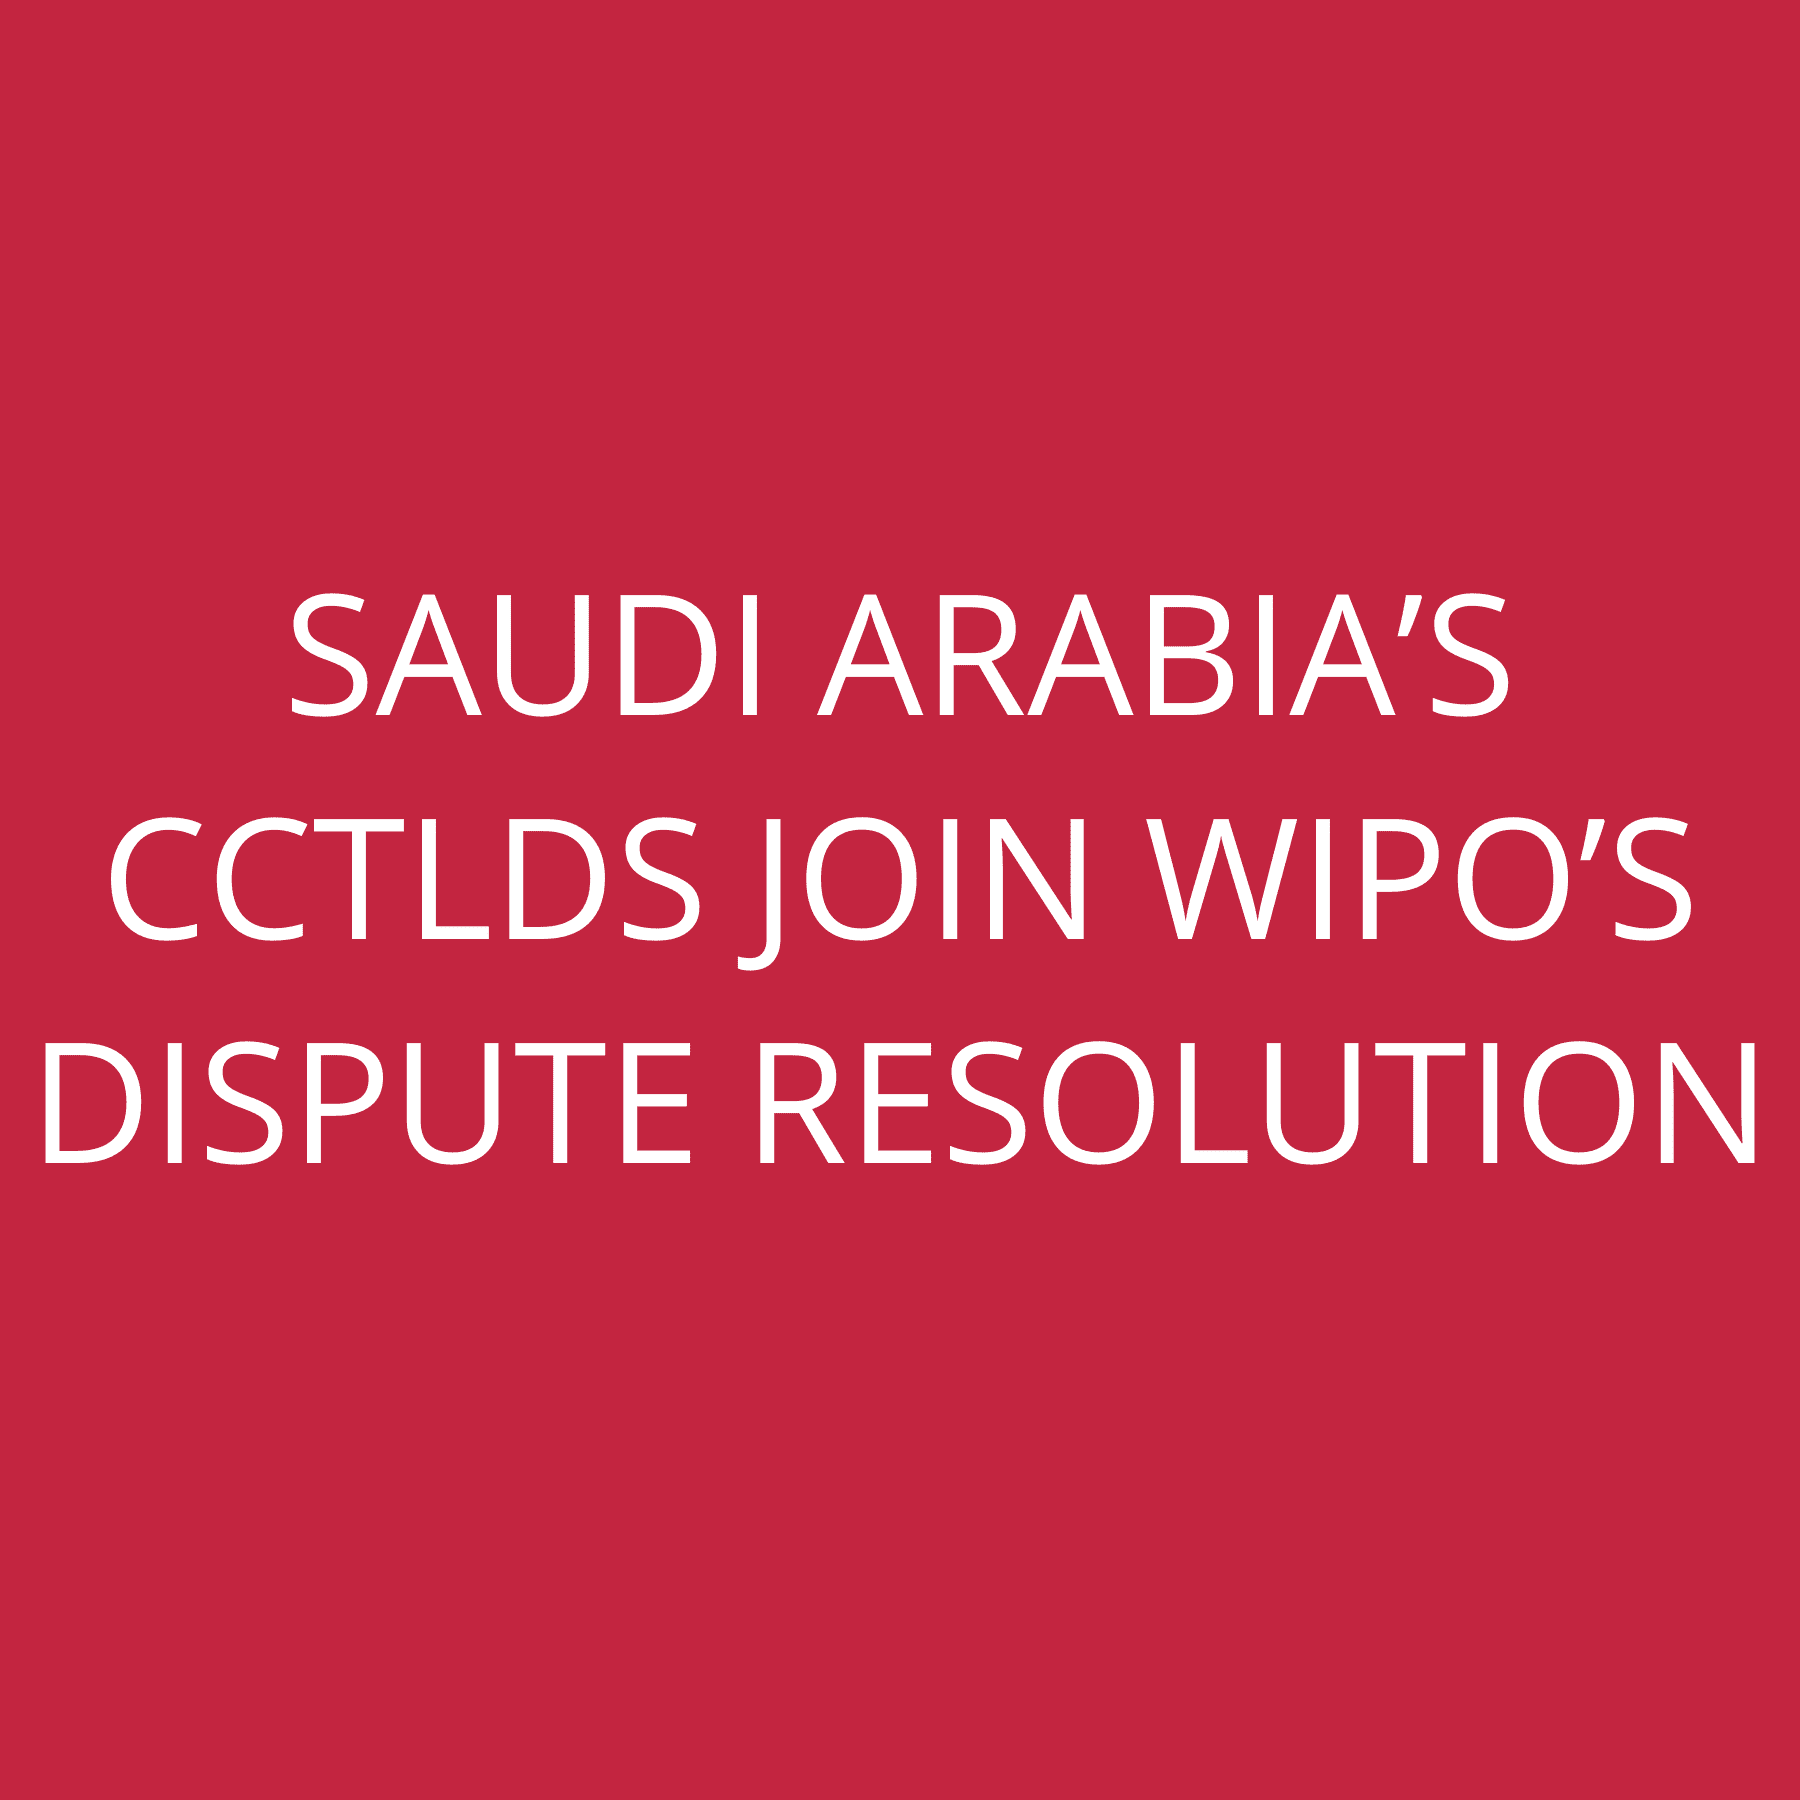 Saudi Arabia’s ccTLDs join WIPO’s dispute resolution